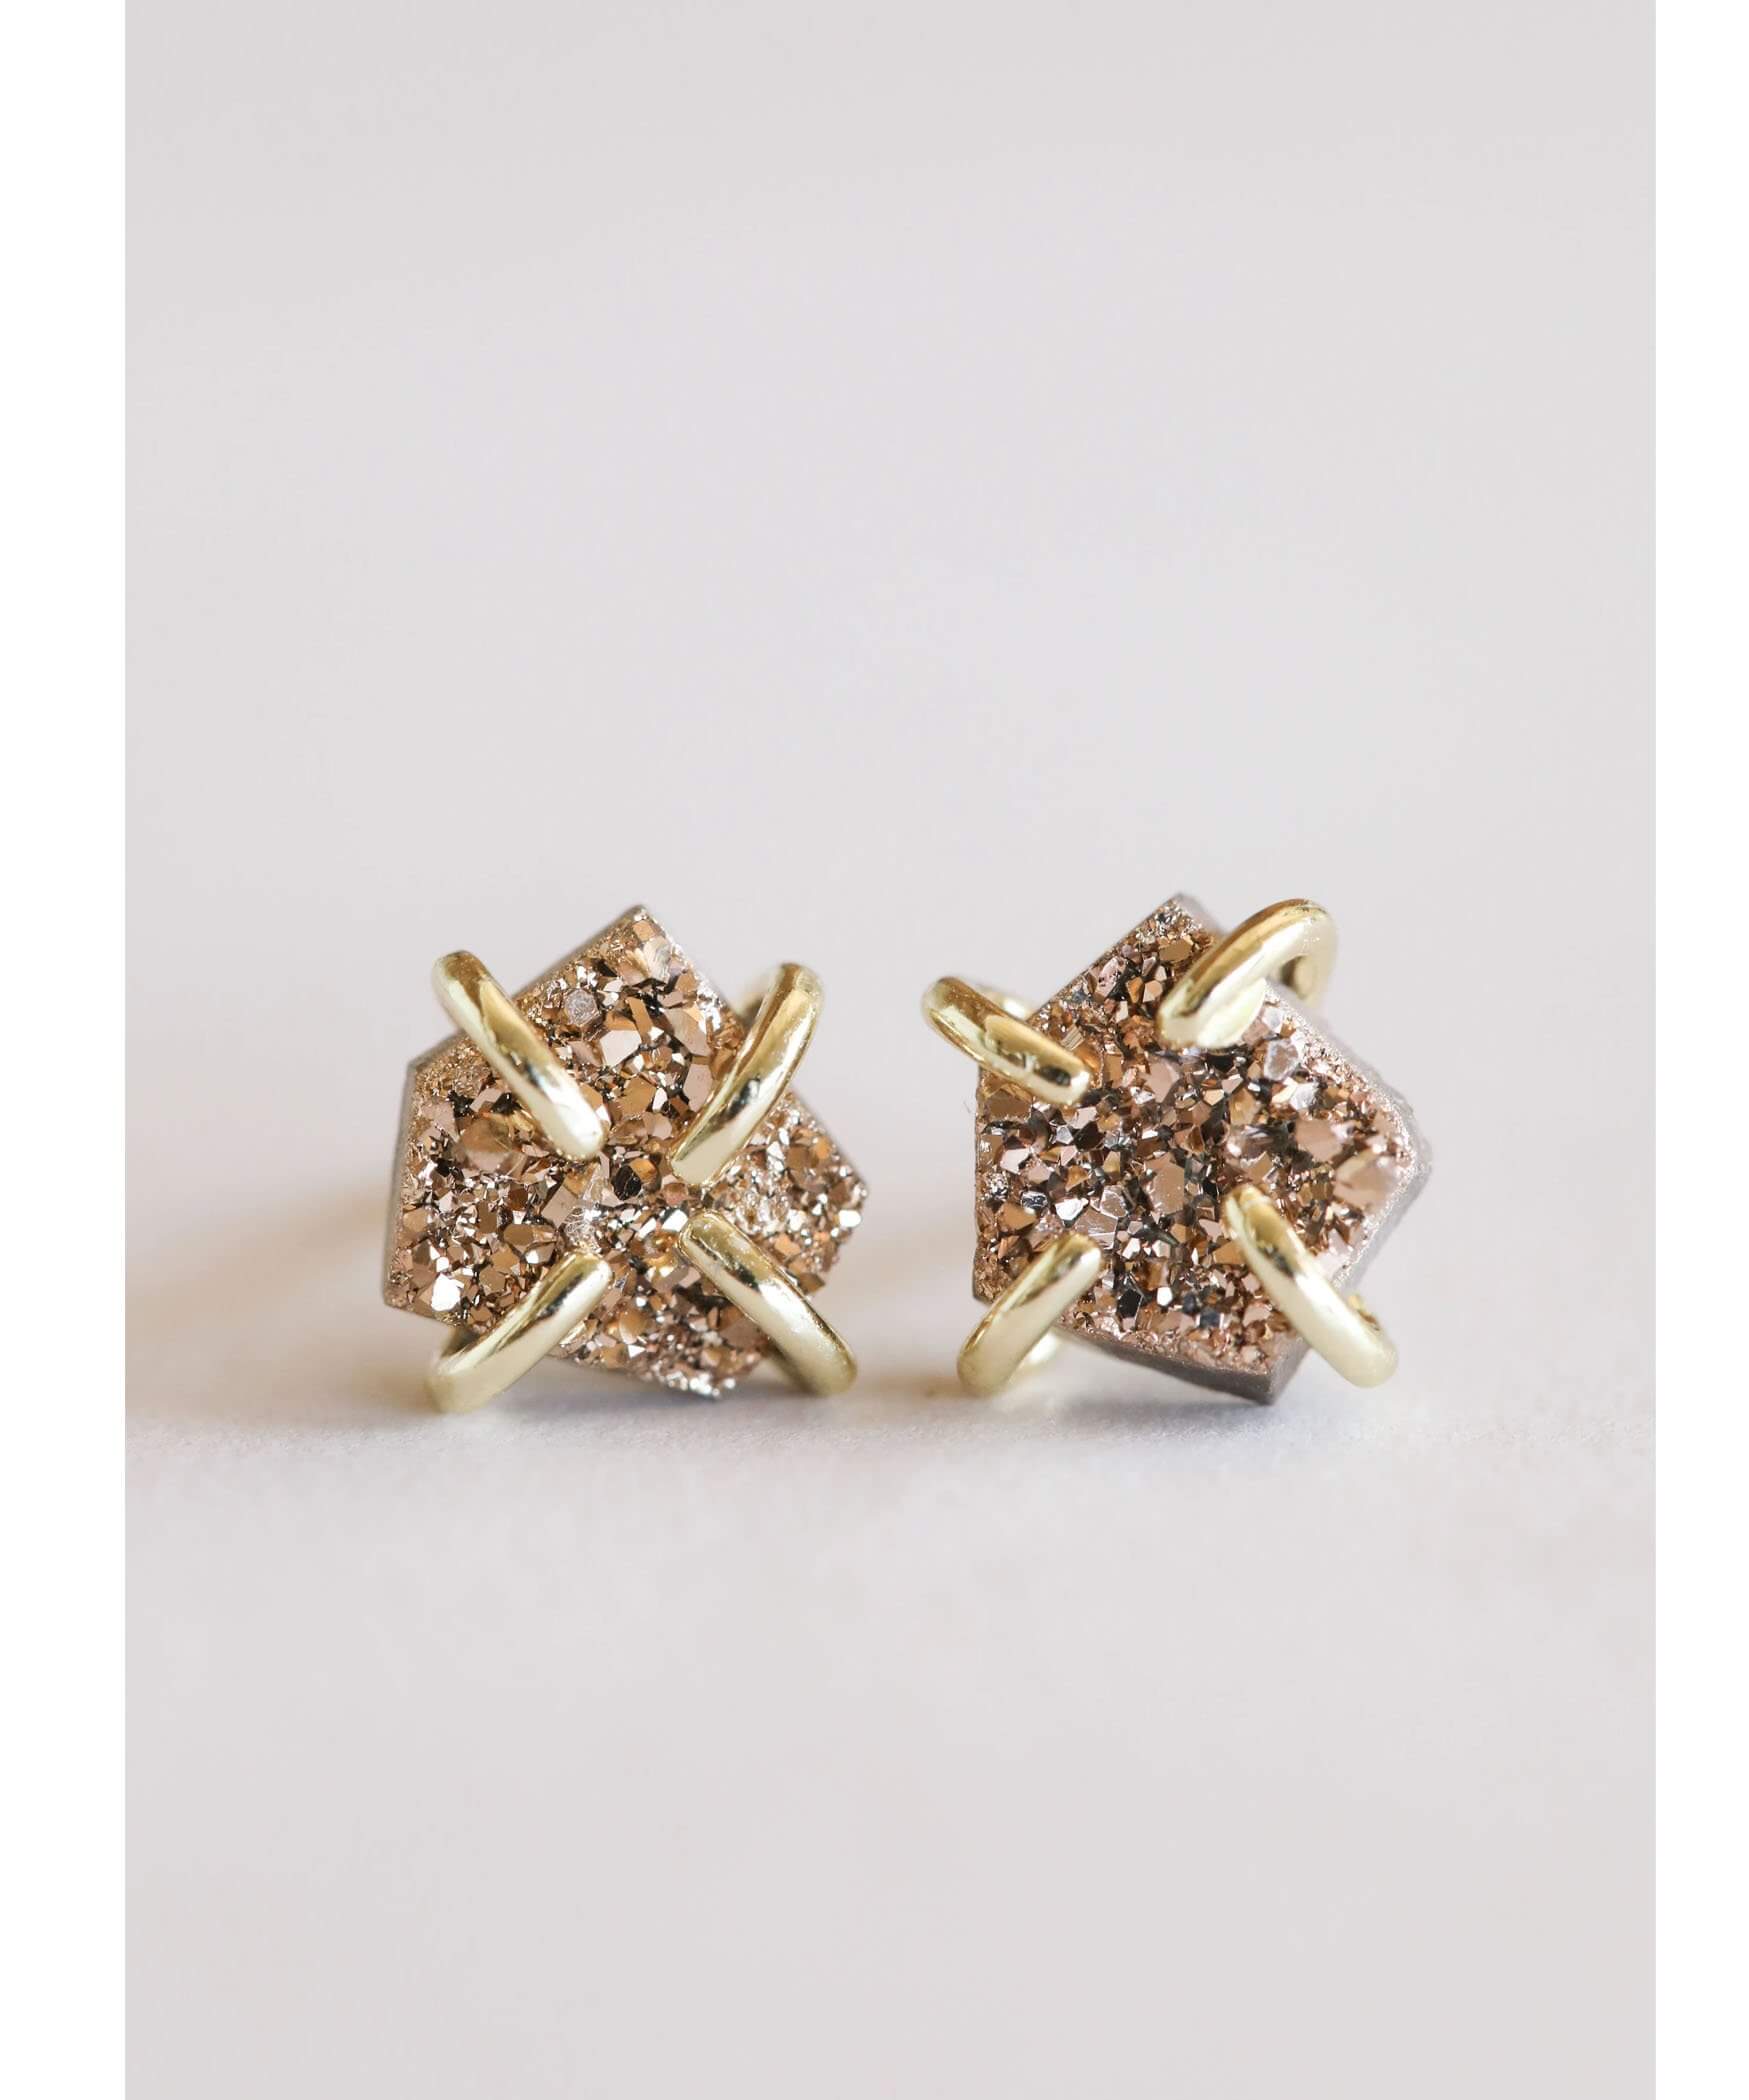 Rose Gold Druzy Prong Earrings